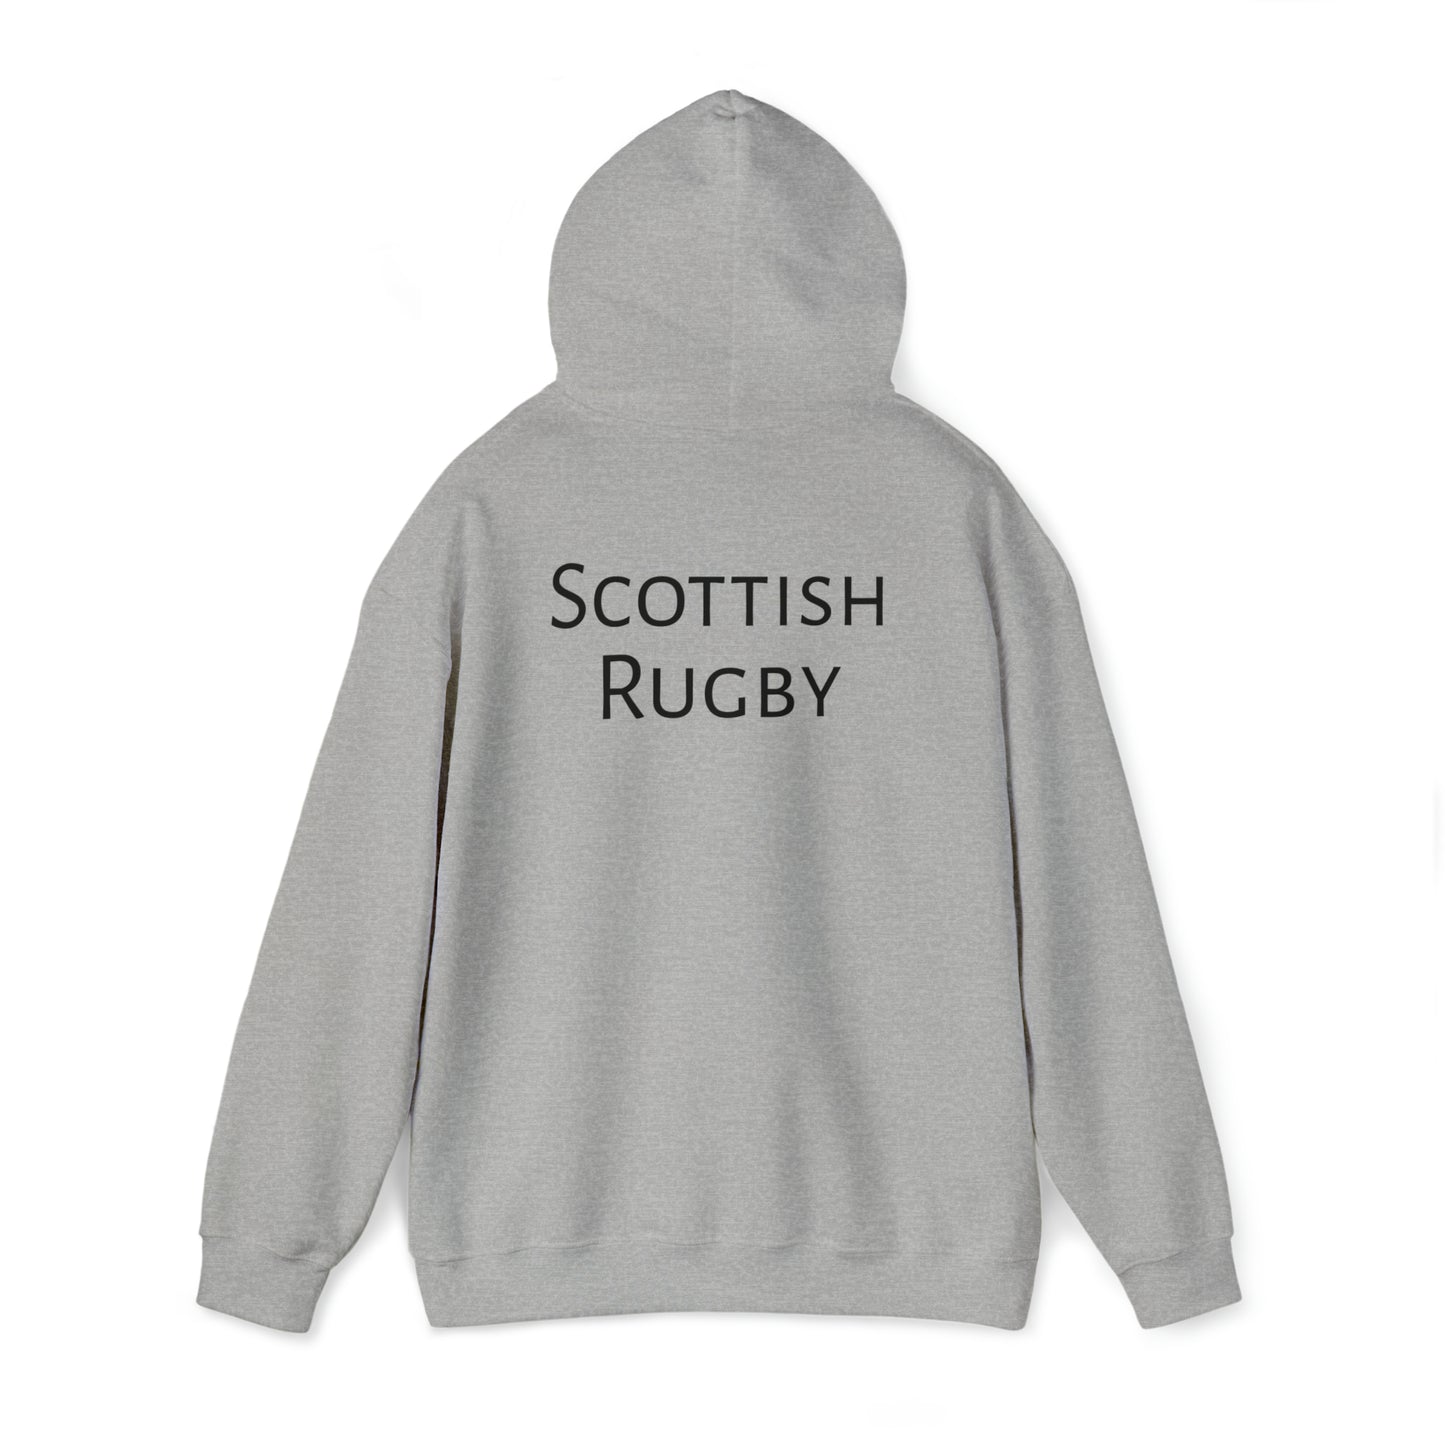 Ready Scotland - light hoodies